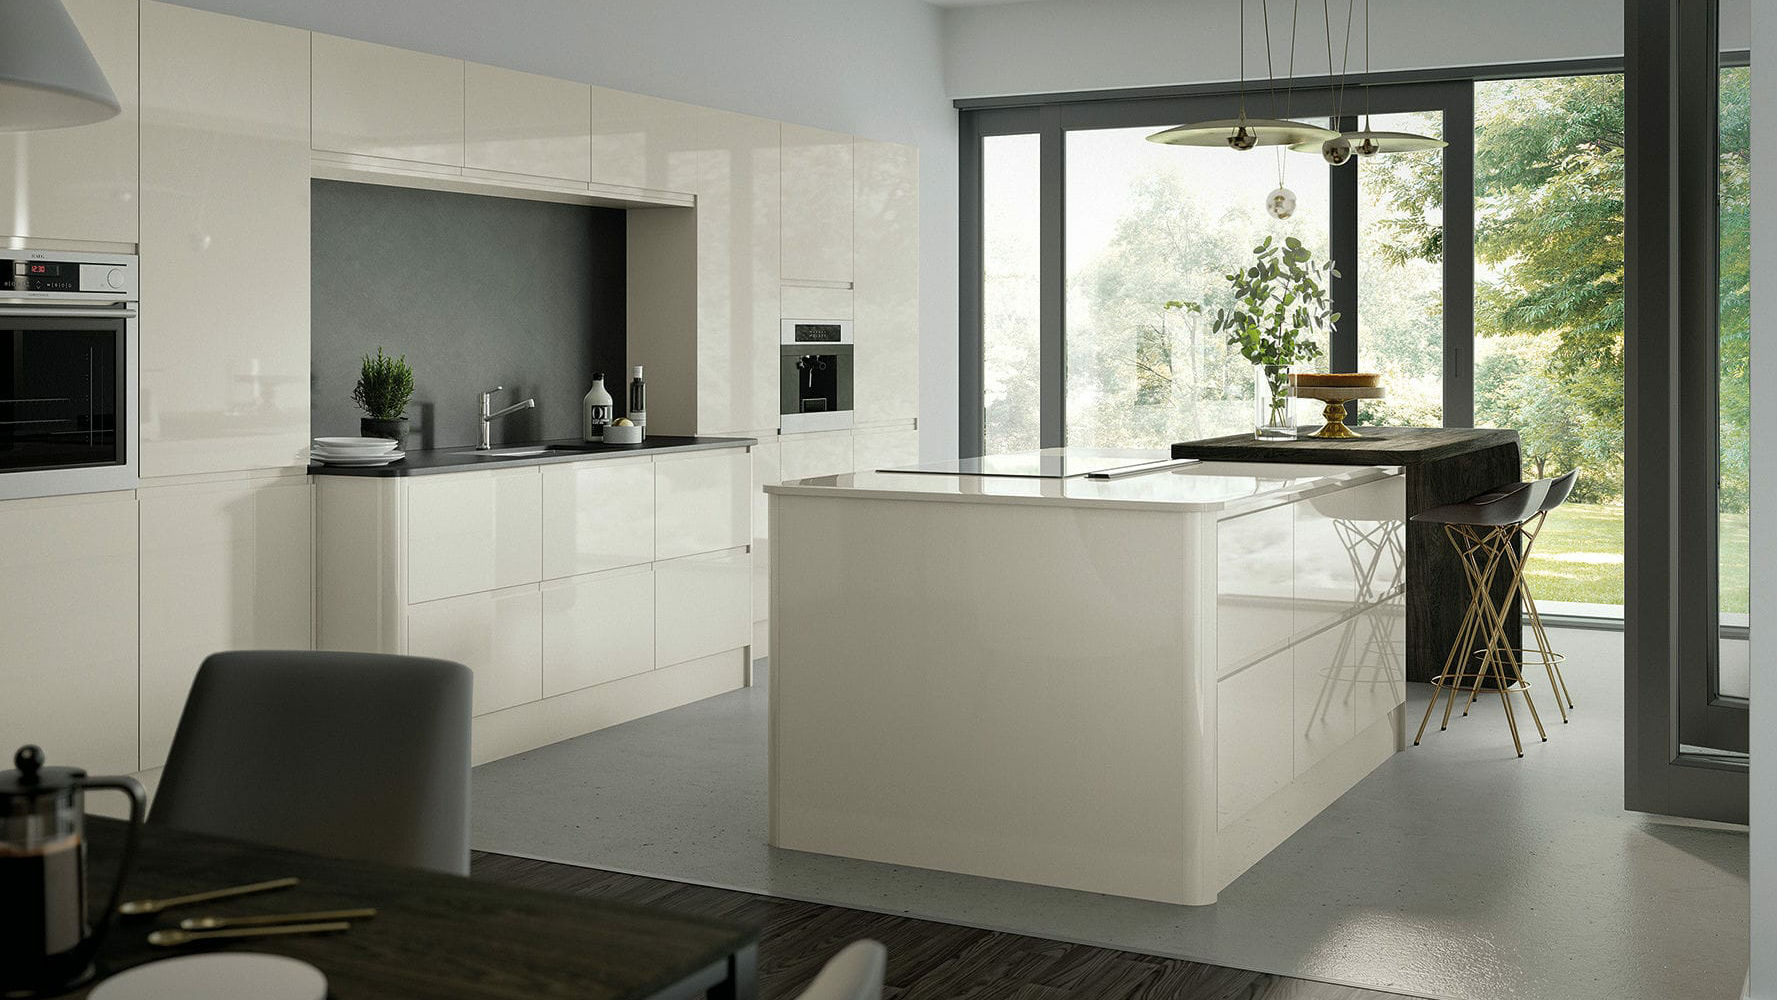 Handleless high gloss porcelain kitchens offering a sleek, reflective finish that enhances modern kitchen spaces